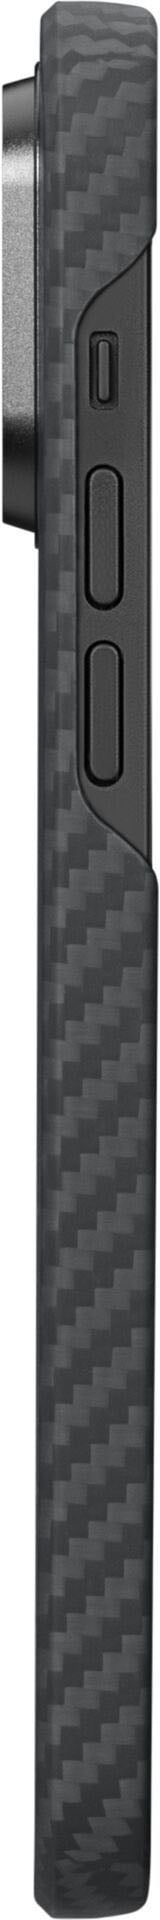 Pitaka Handyhülle »MagEz Case 3 for Pro Max iPhone 14 Black/Grey Twill«, hergestellt aus 1500D Aramid-Fasern